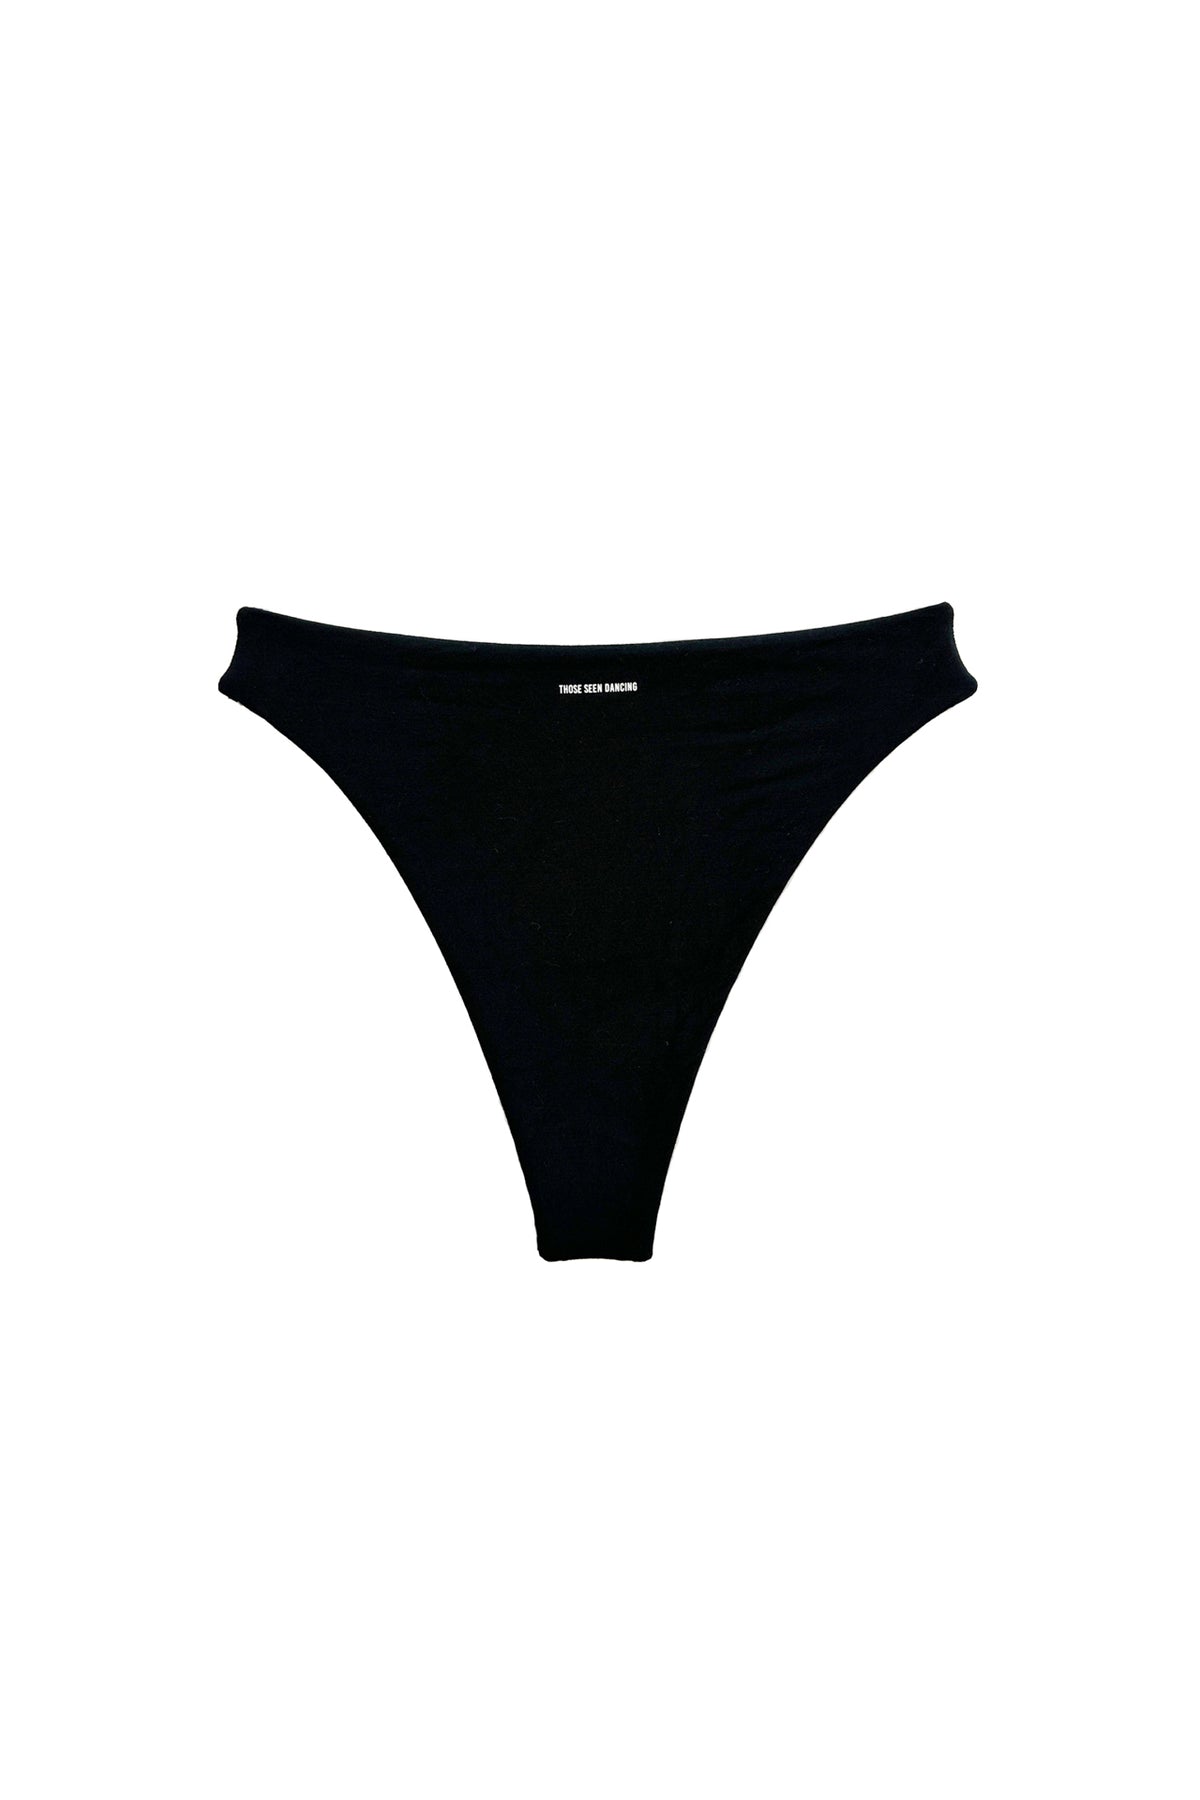 Paiko High Waist Bikini Bottom // Cozy Black